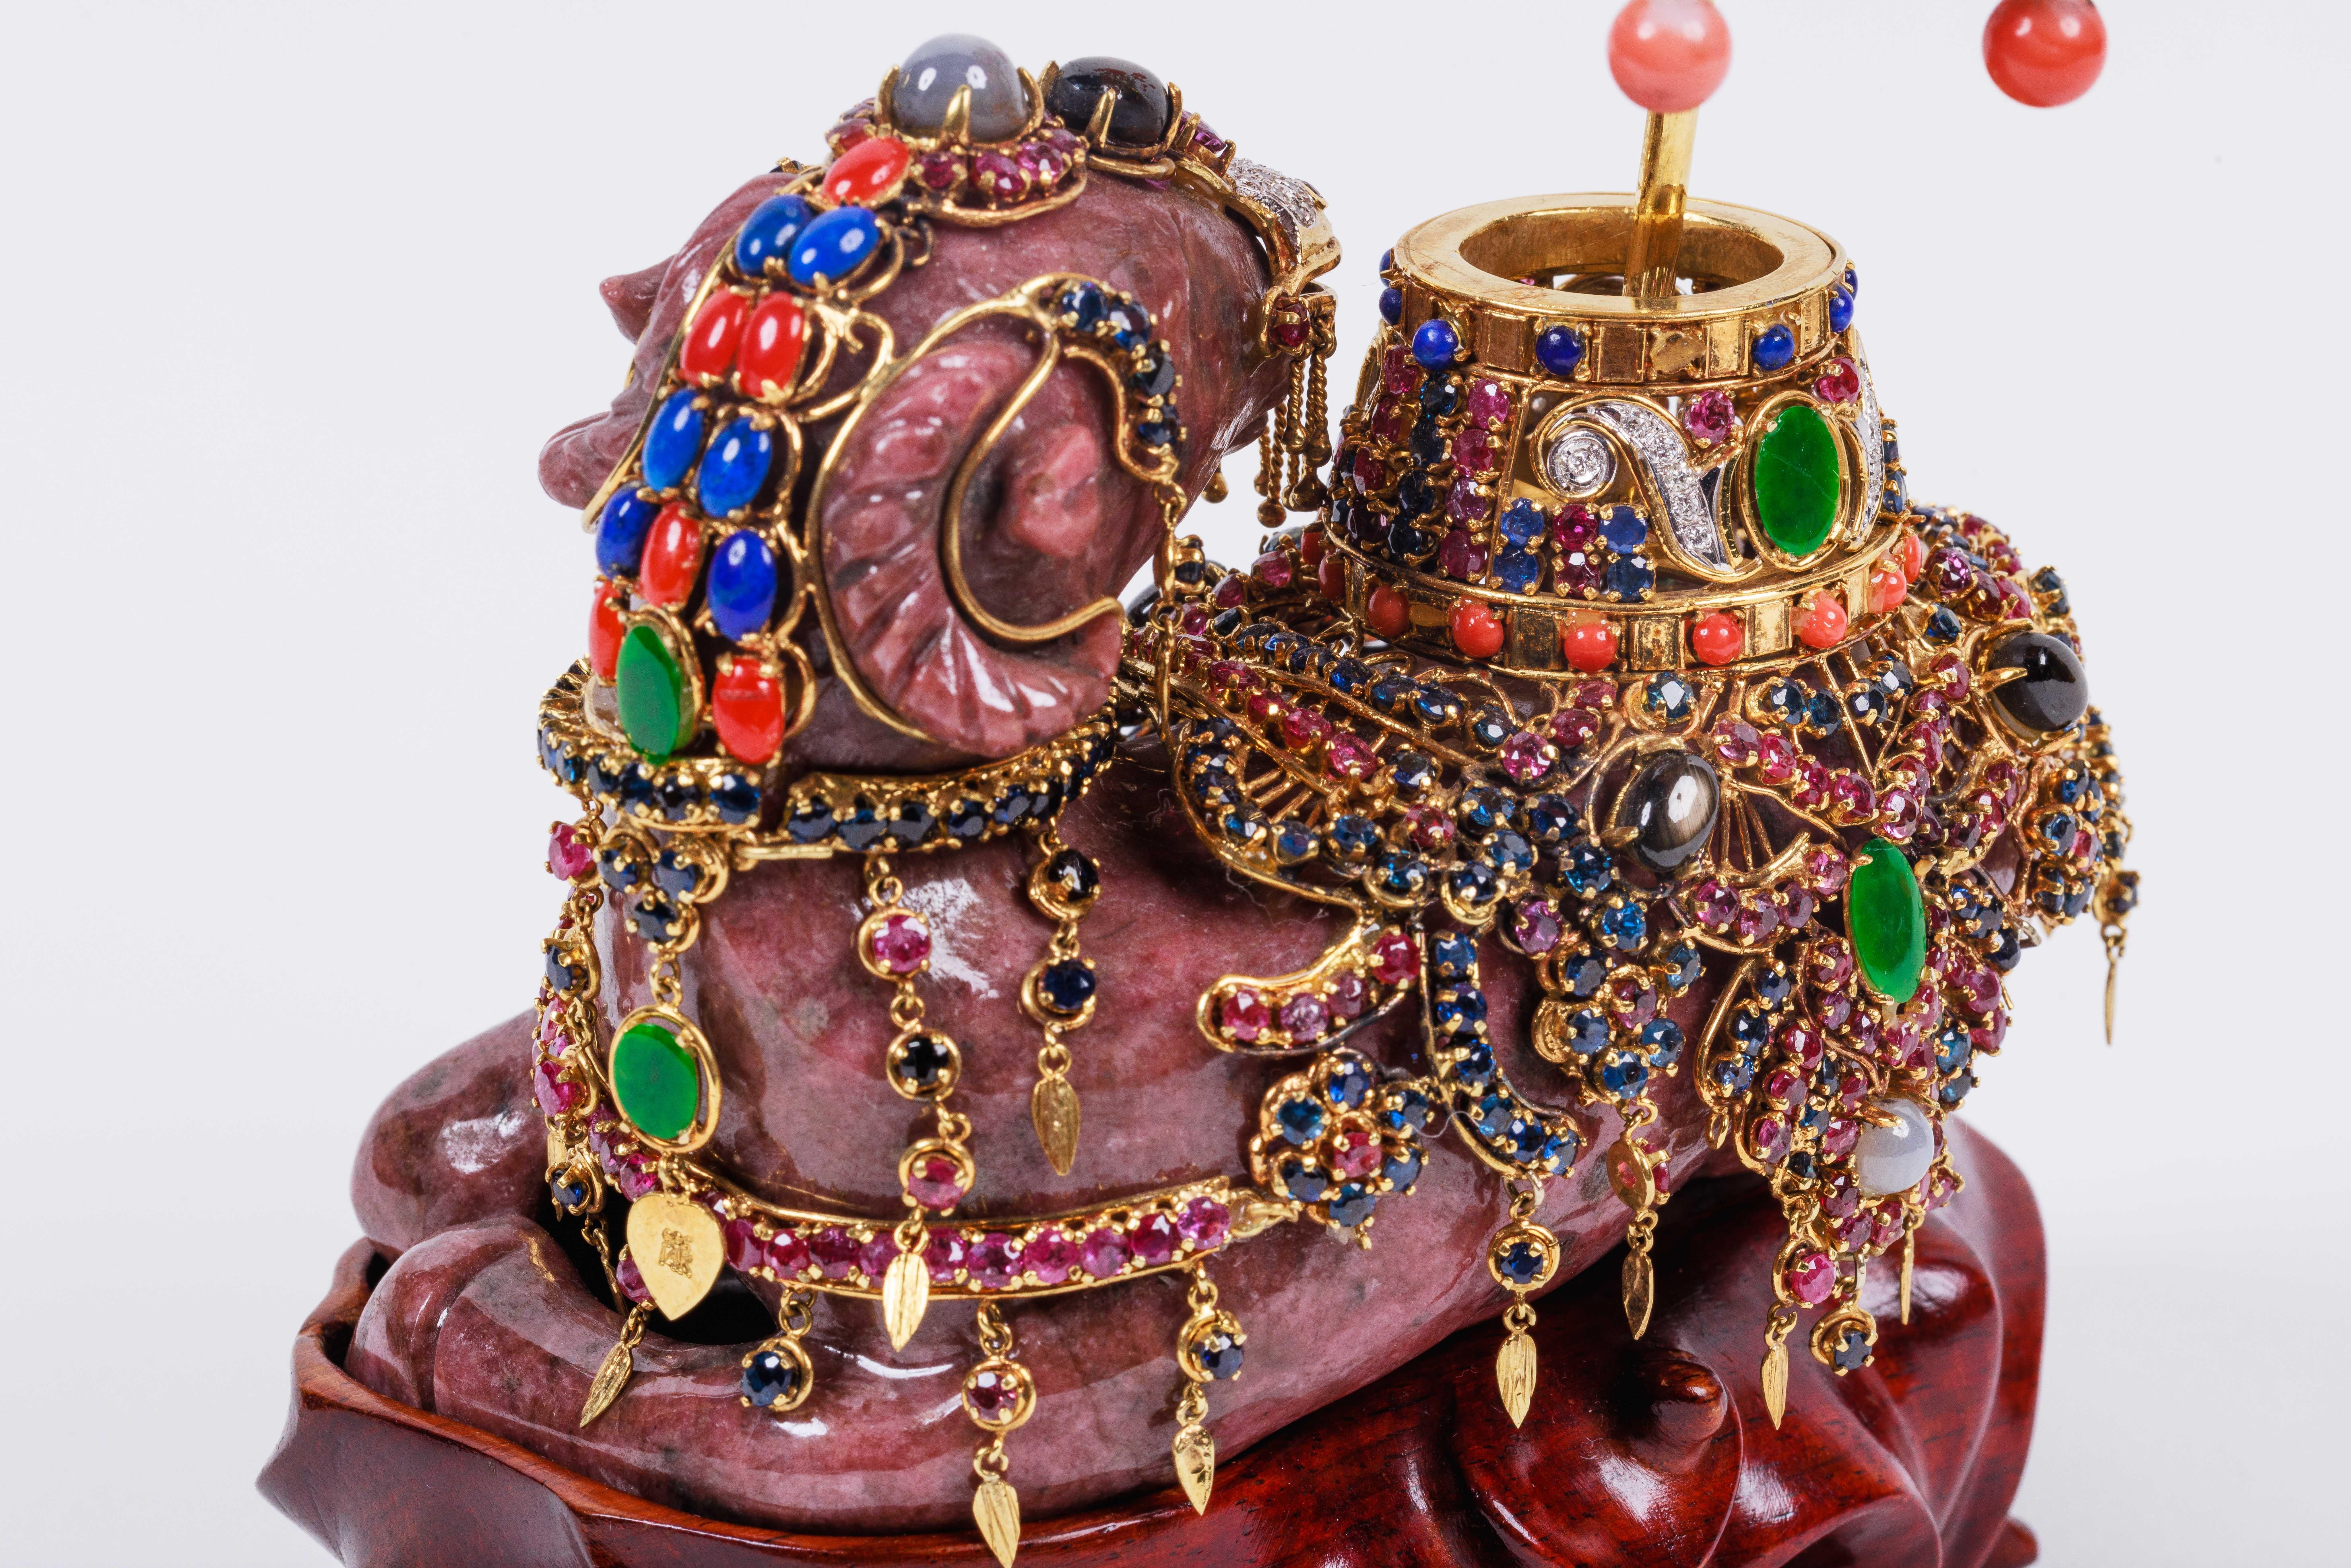 Exquisite 14K Gold, Diamonds, Emeralds, Rubies, Semi Precious Stone Camel For Sale 4